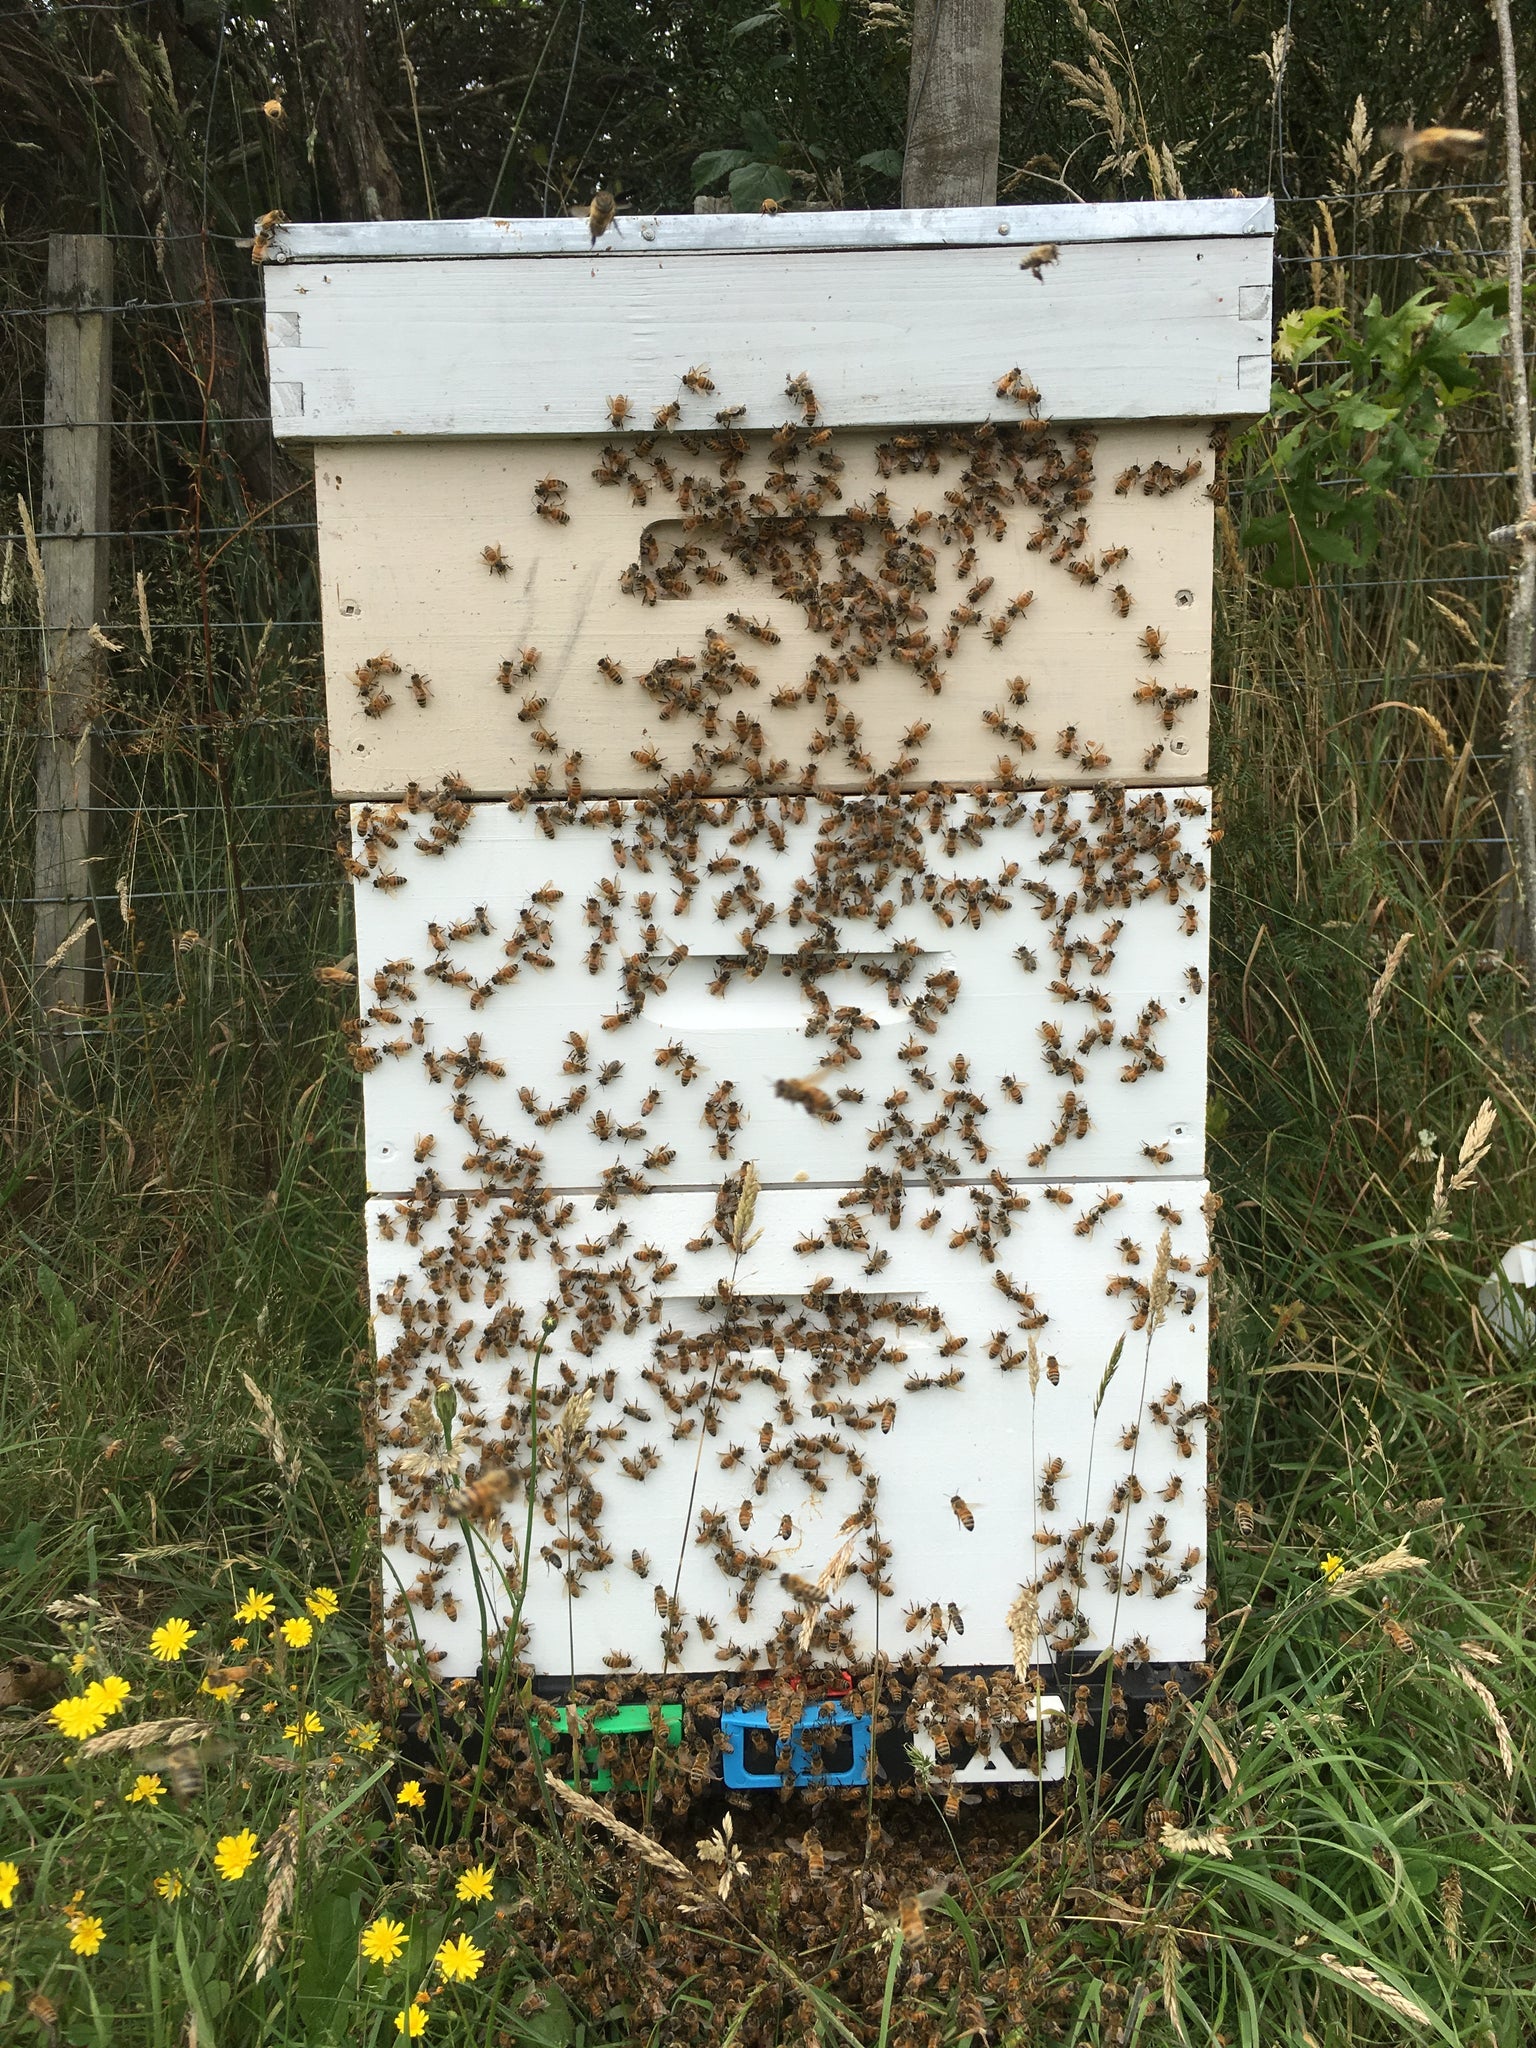 Overcrowded beehive